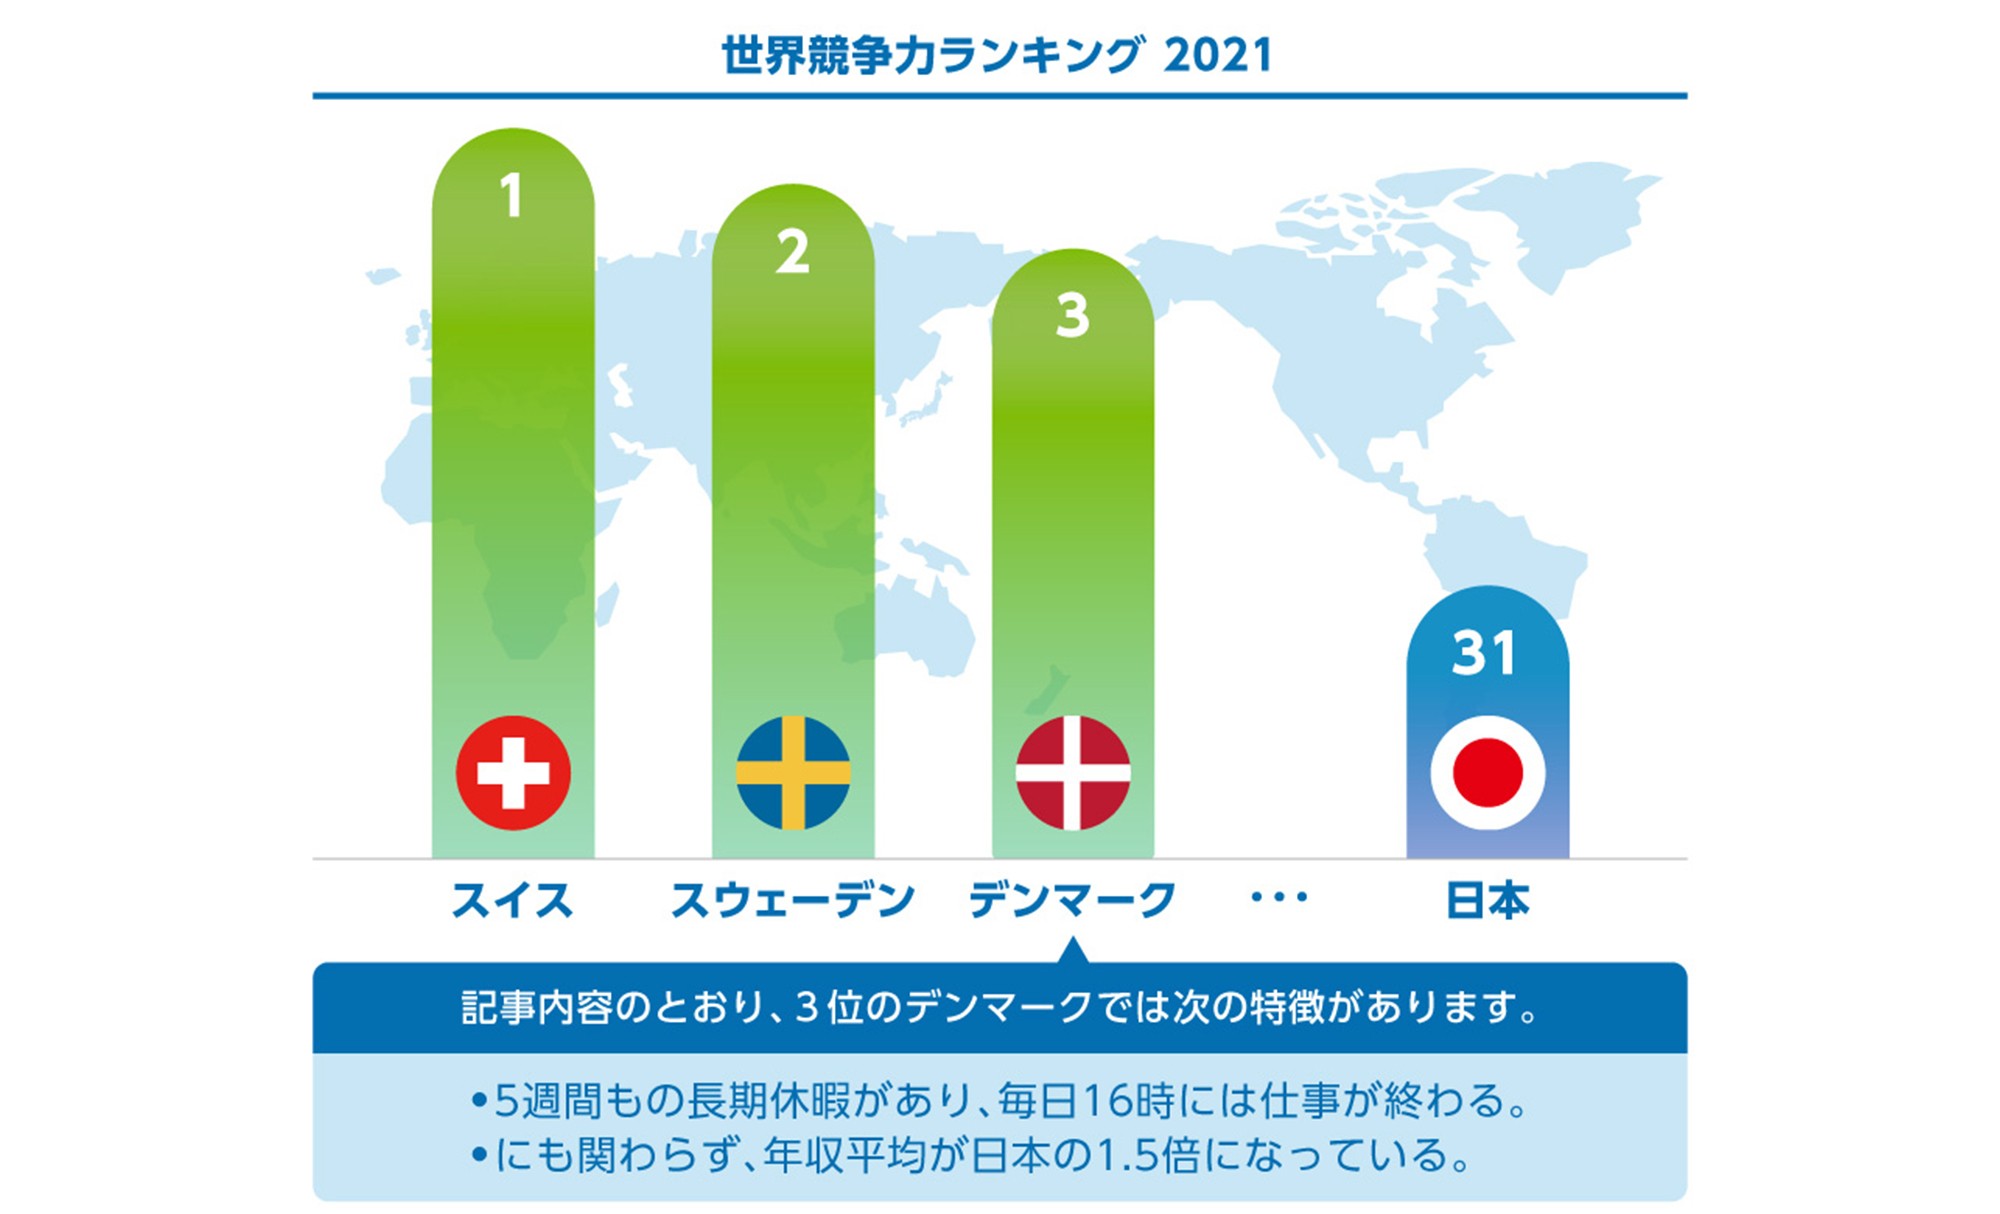 「IMD：World Competitiveness Ranking」を元に作成 (注2)